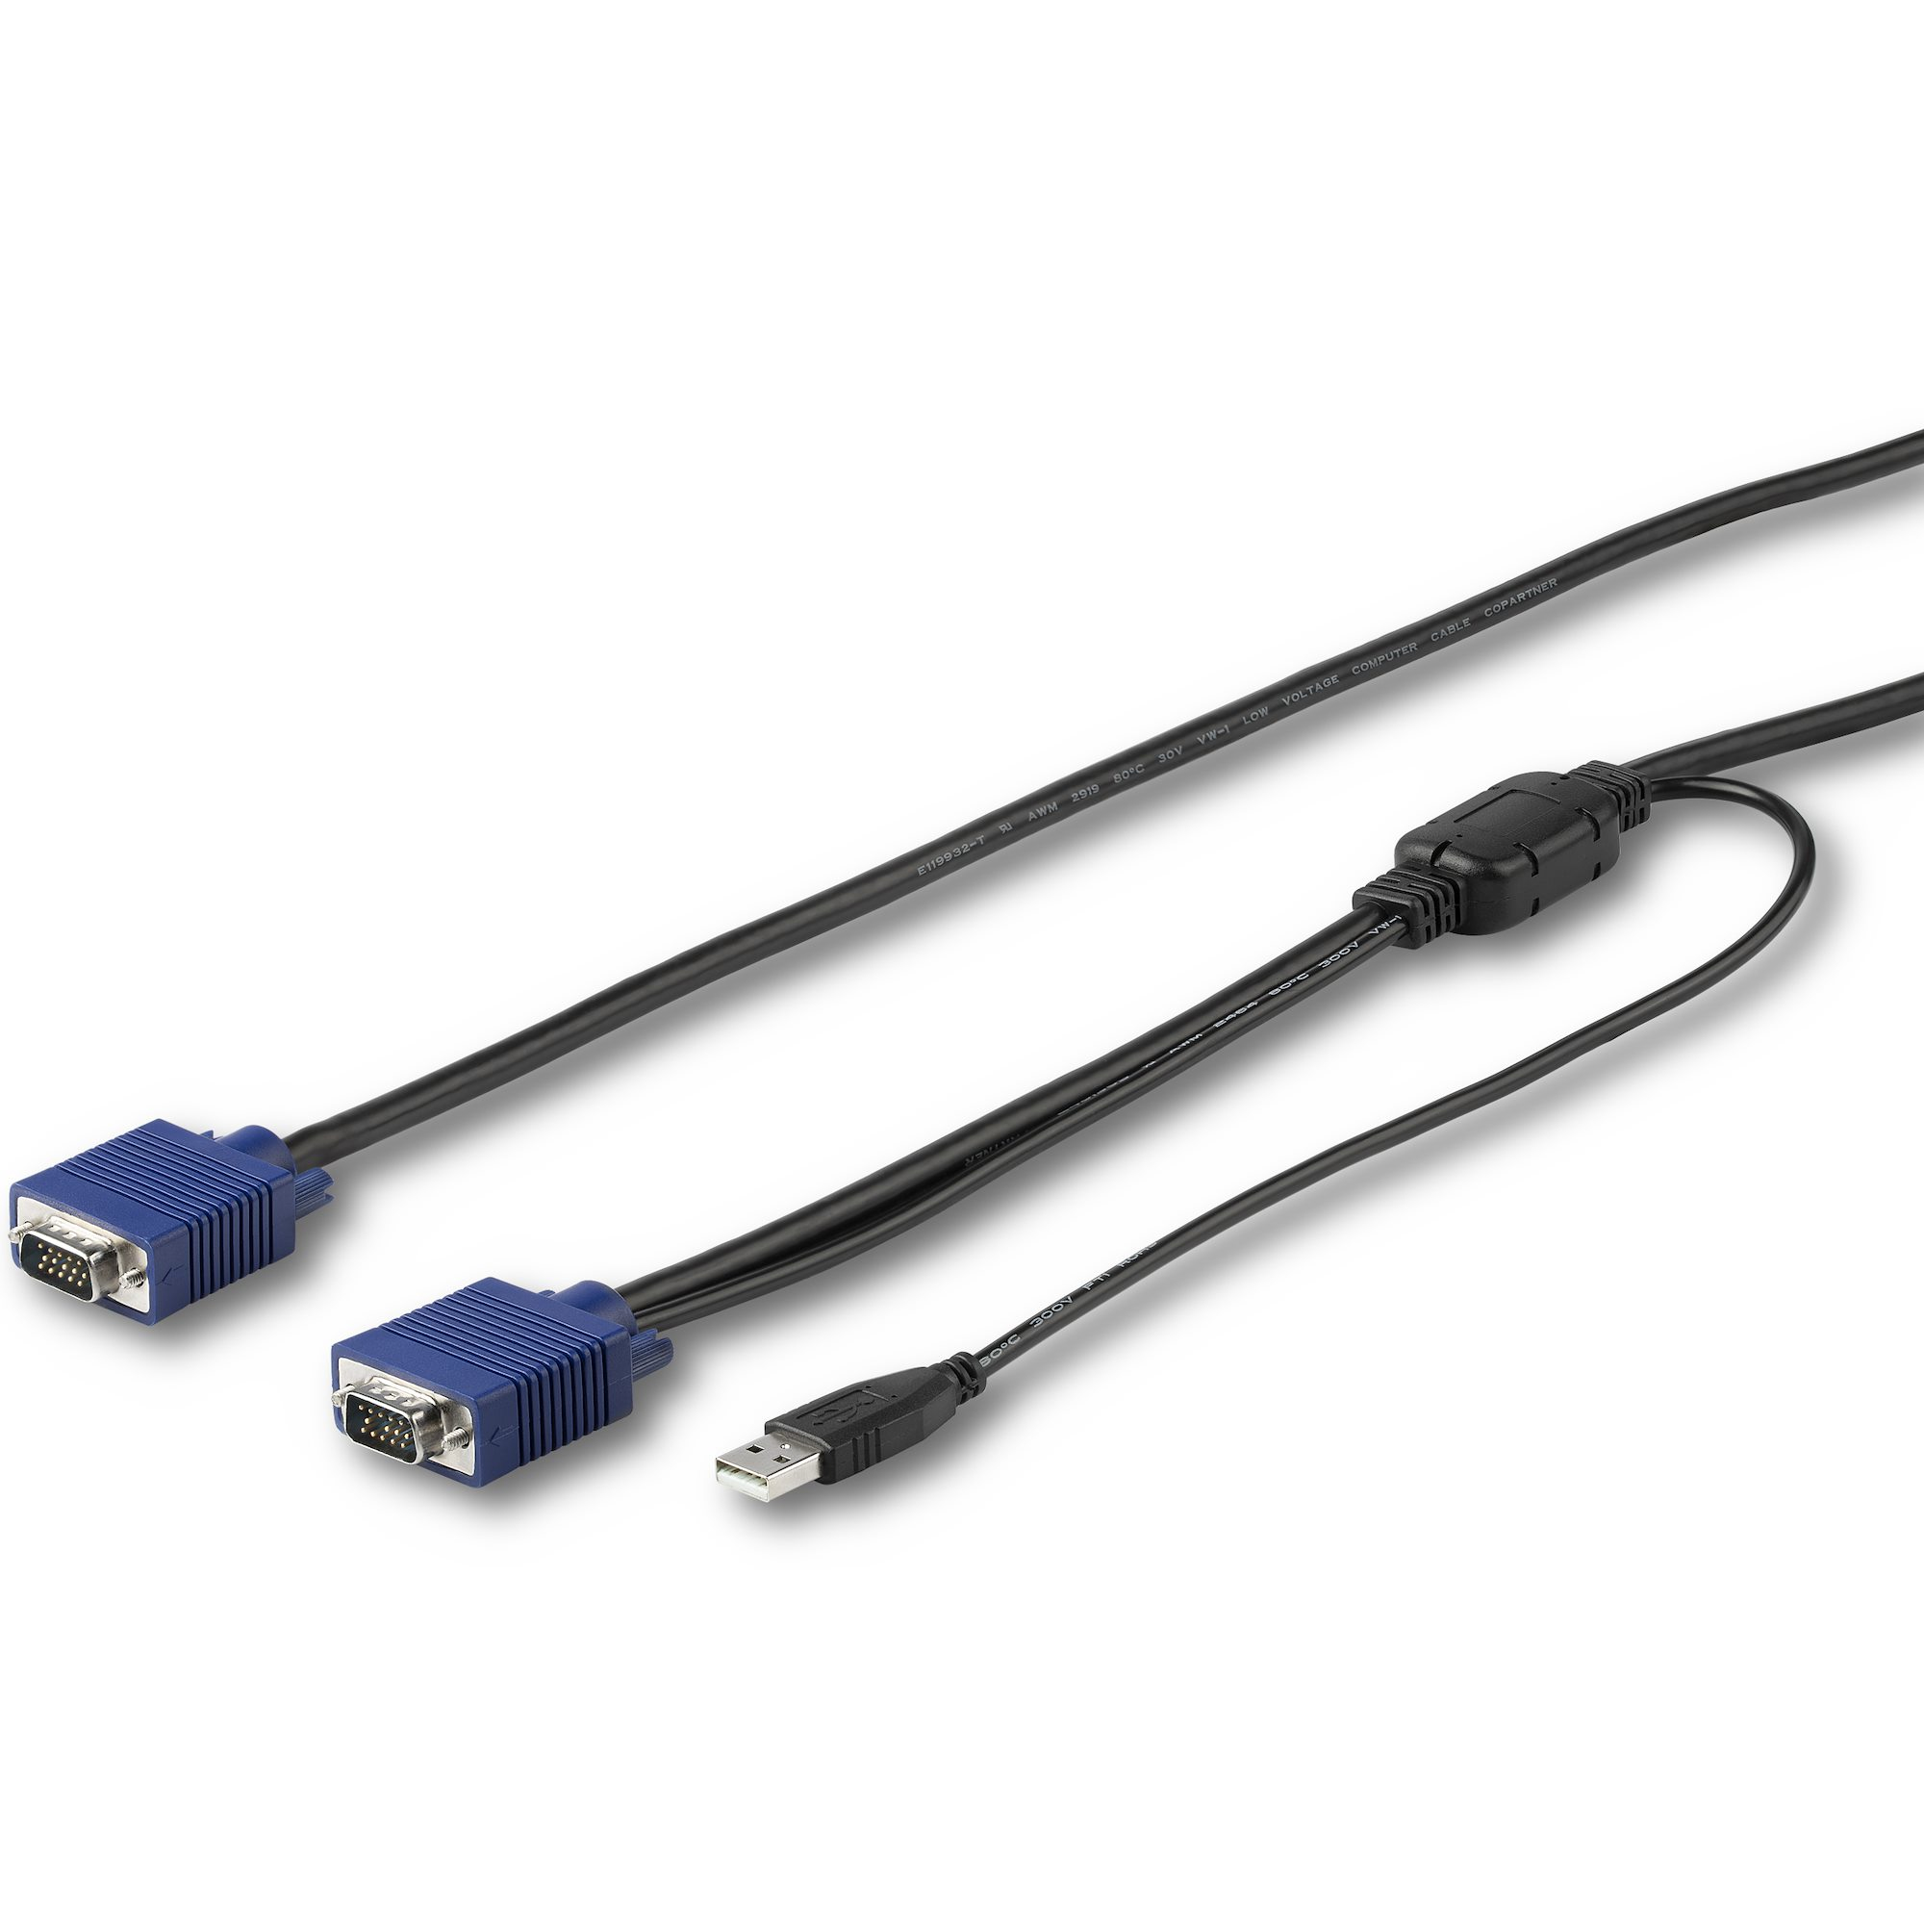 StarTech.com 10 ft. (3 m) USB KVM Cable for StarTech.com Rackmount Consoles - VGA and USB KVM Console Cable (RKCONSUV10)